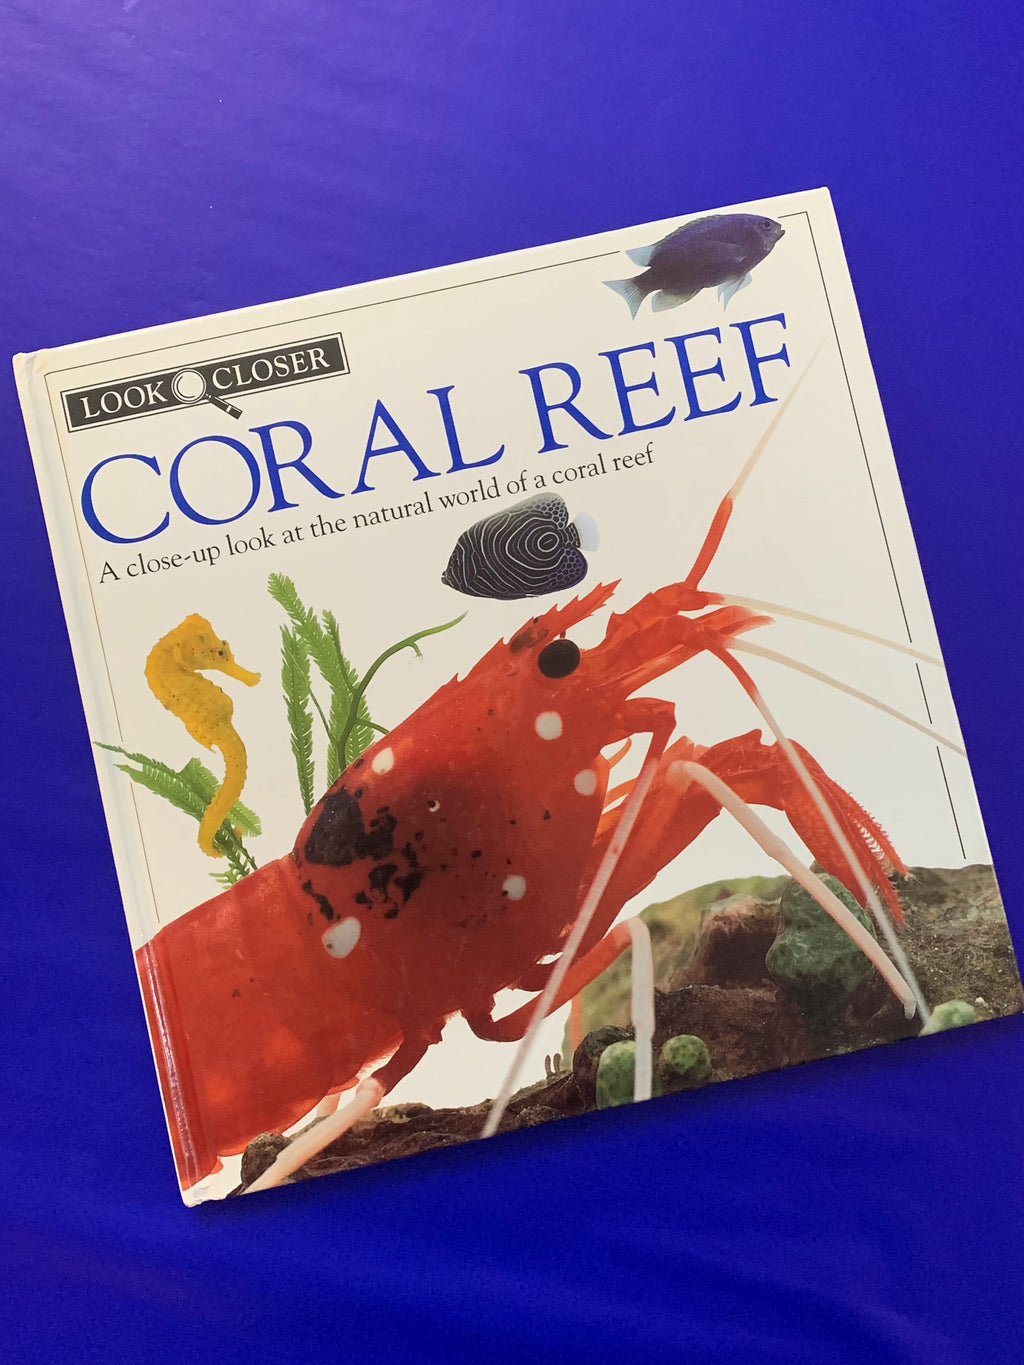 Look Closer: Coral Reef